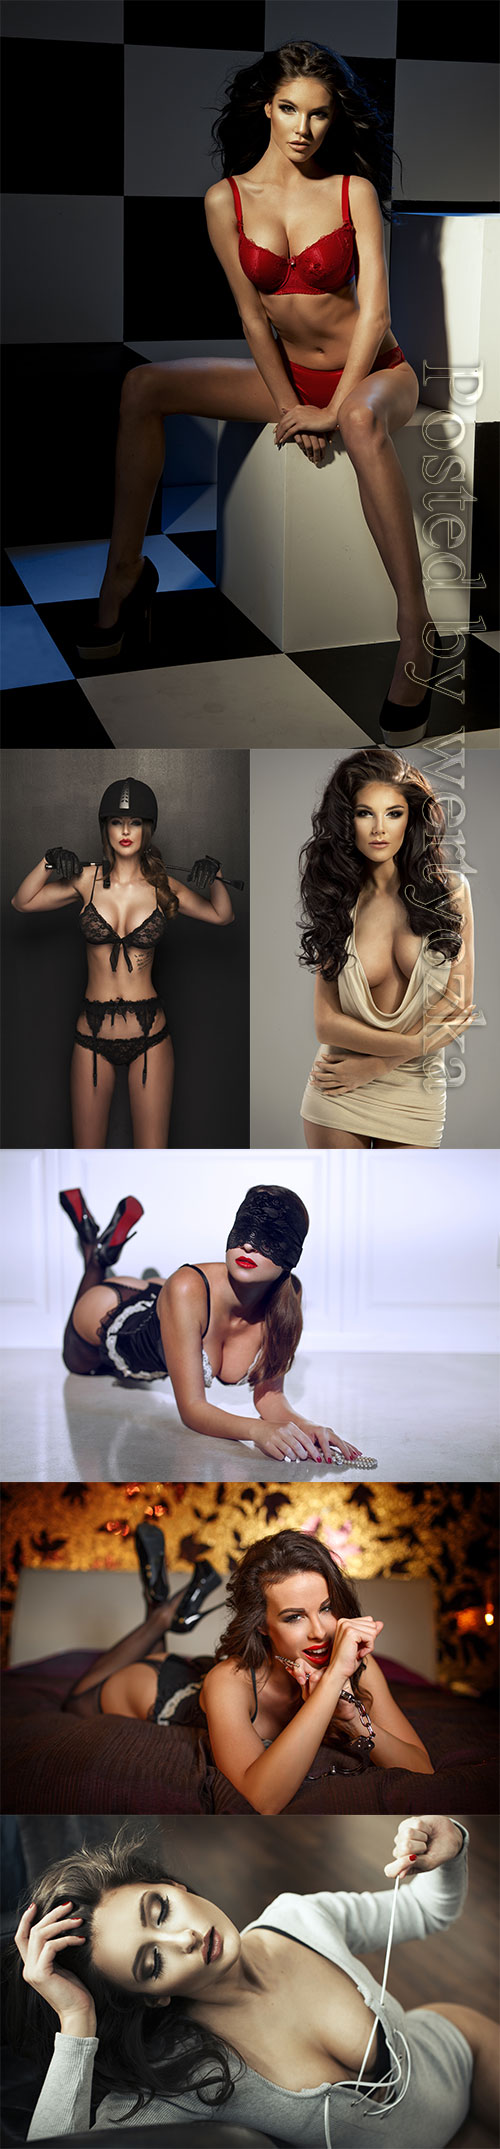 Luxury women in lingerie posing stock photo vol 17